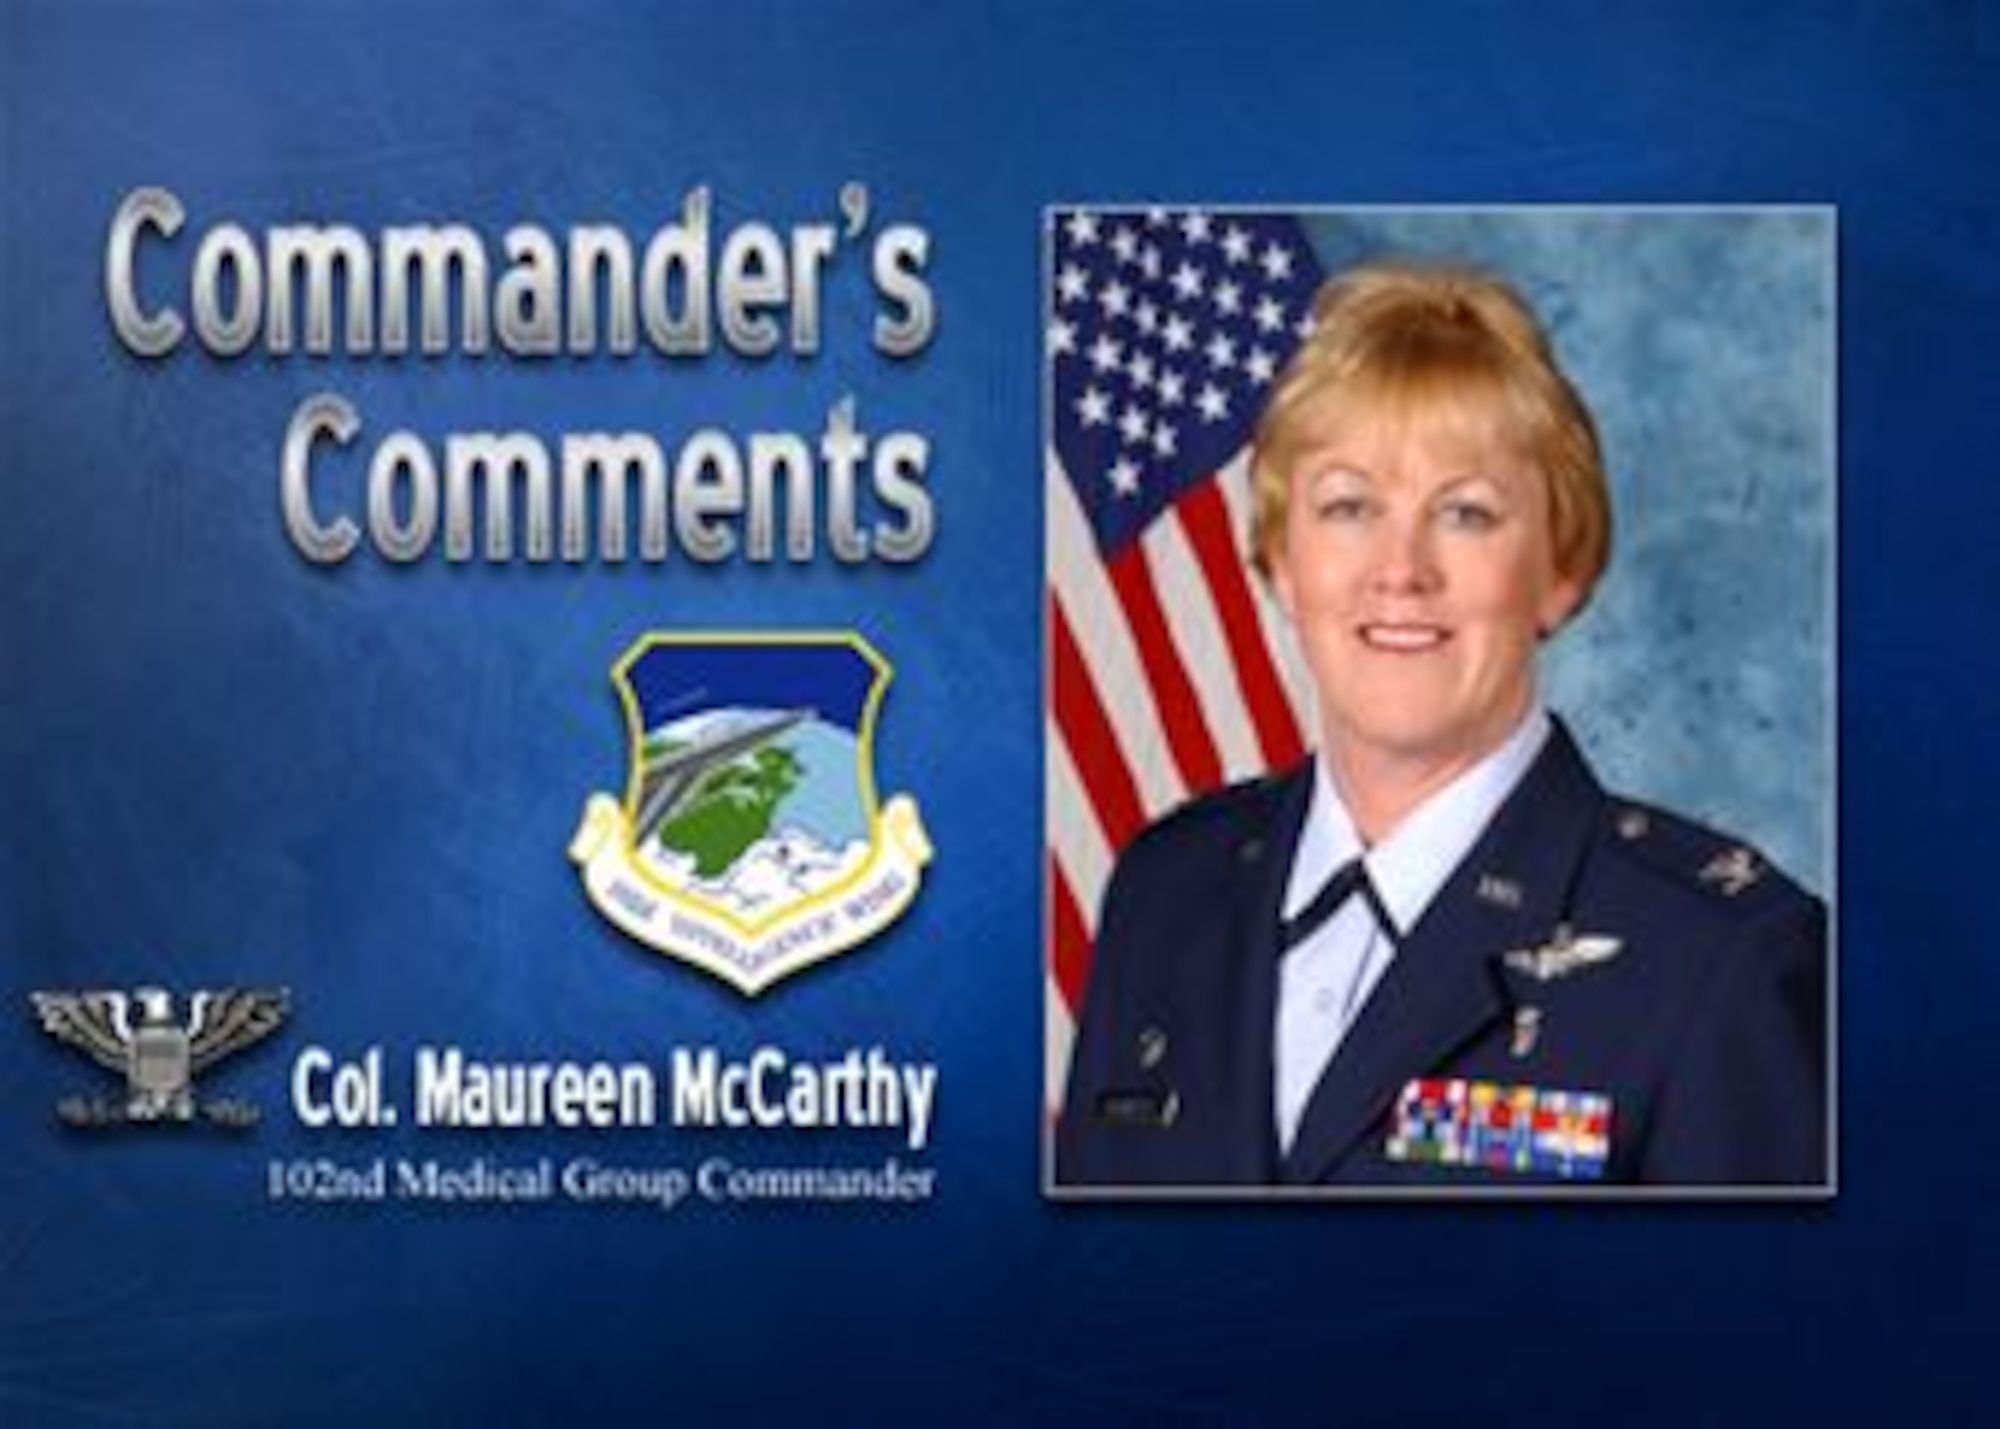 Commander's Comments: Col. Maureen McCarthy